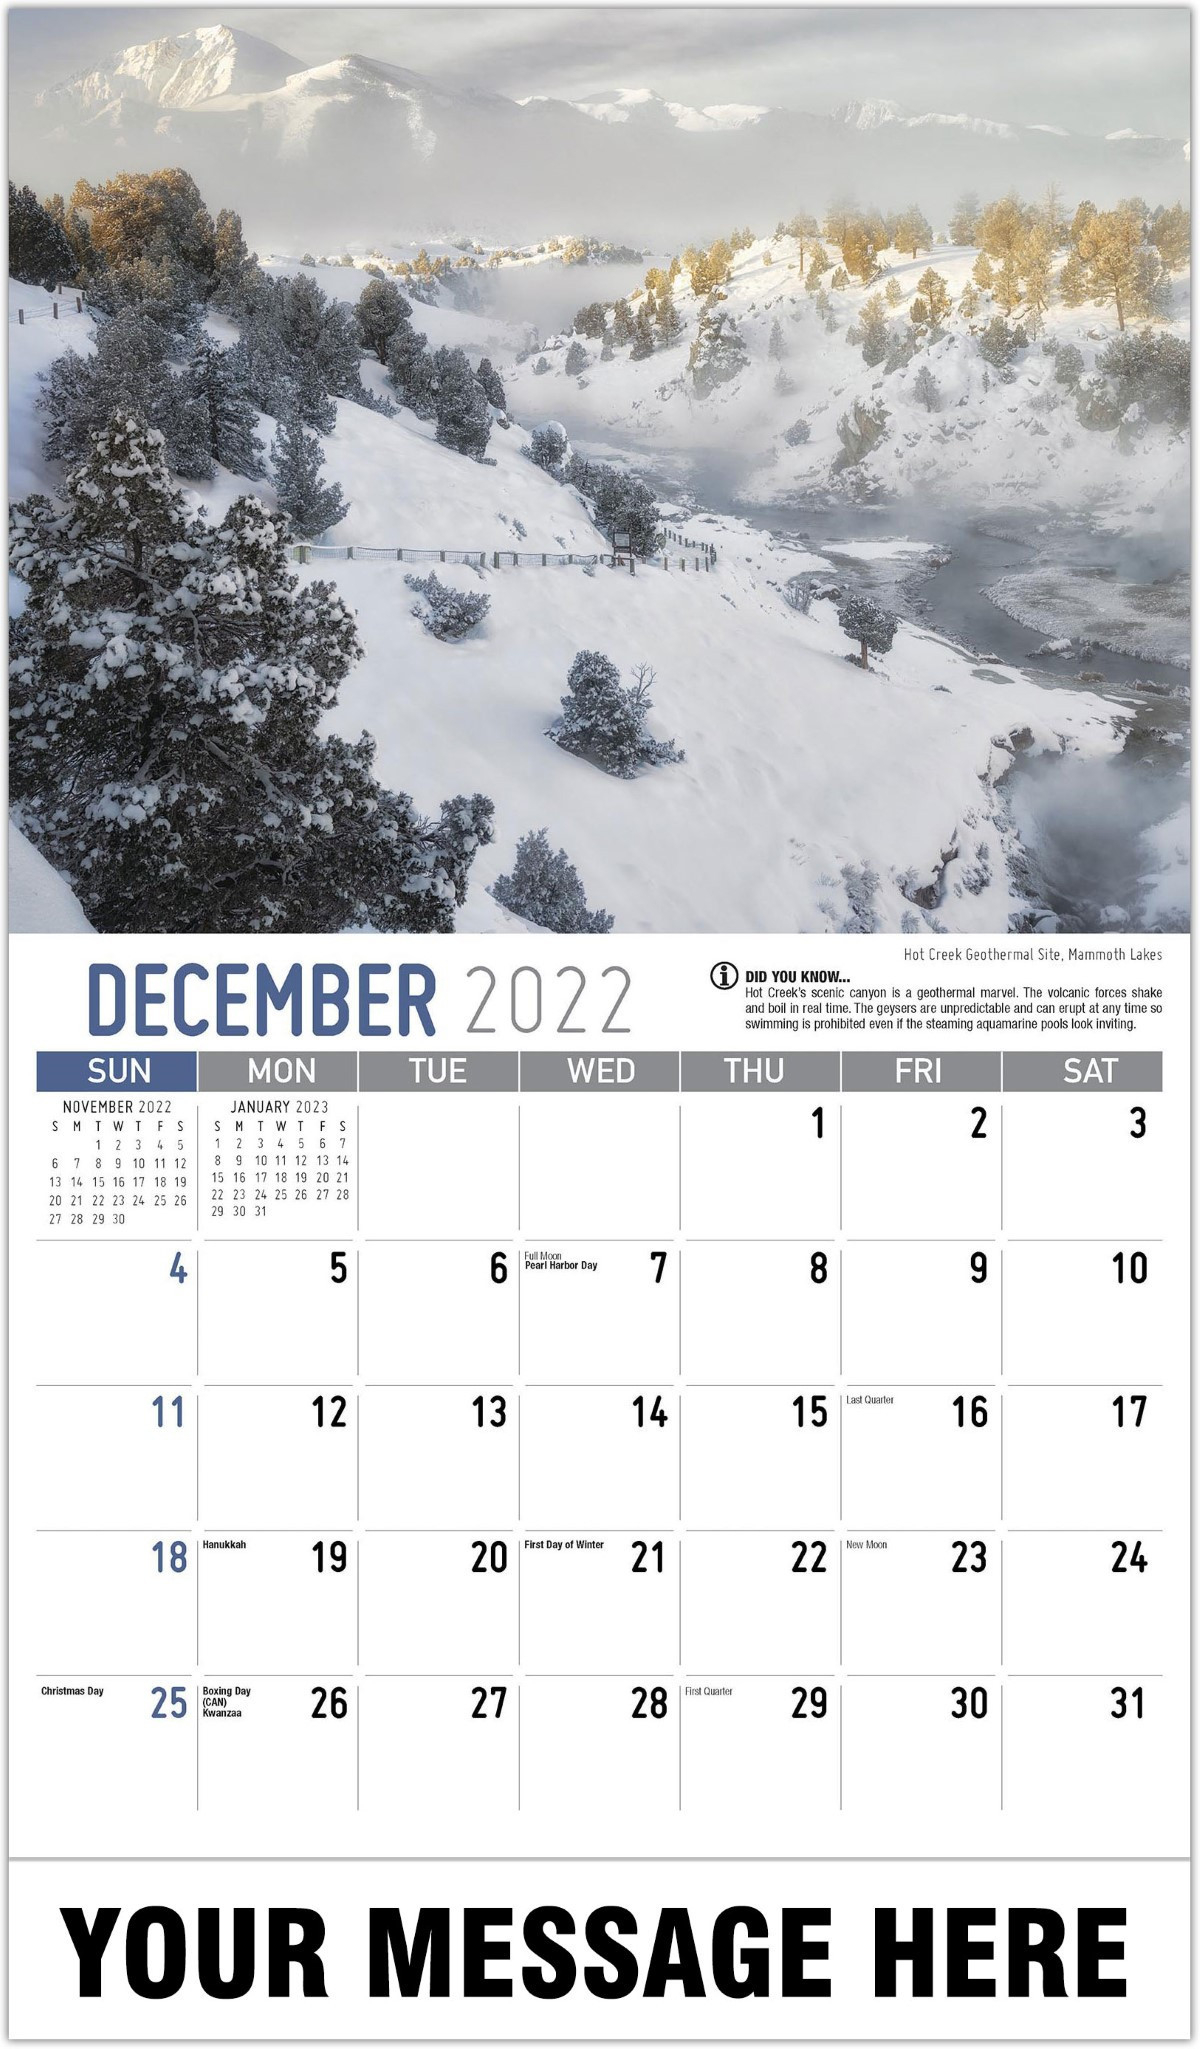 Scenes Of California - 2022 Promotional Calendar  Calendar 2022 California